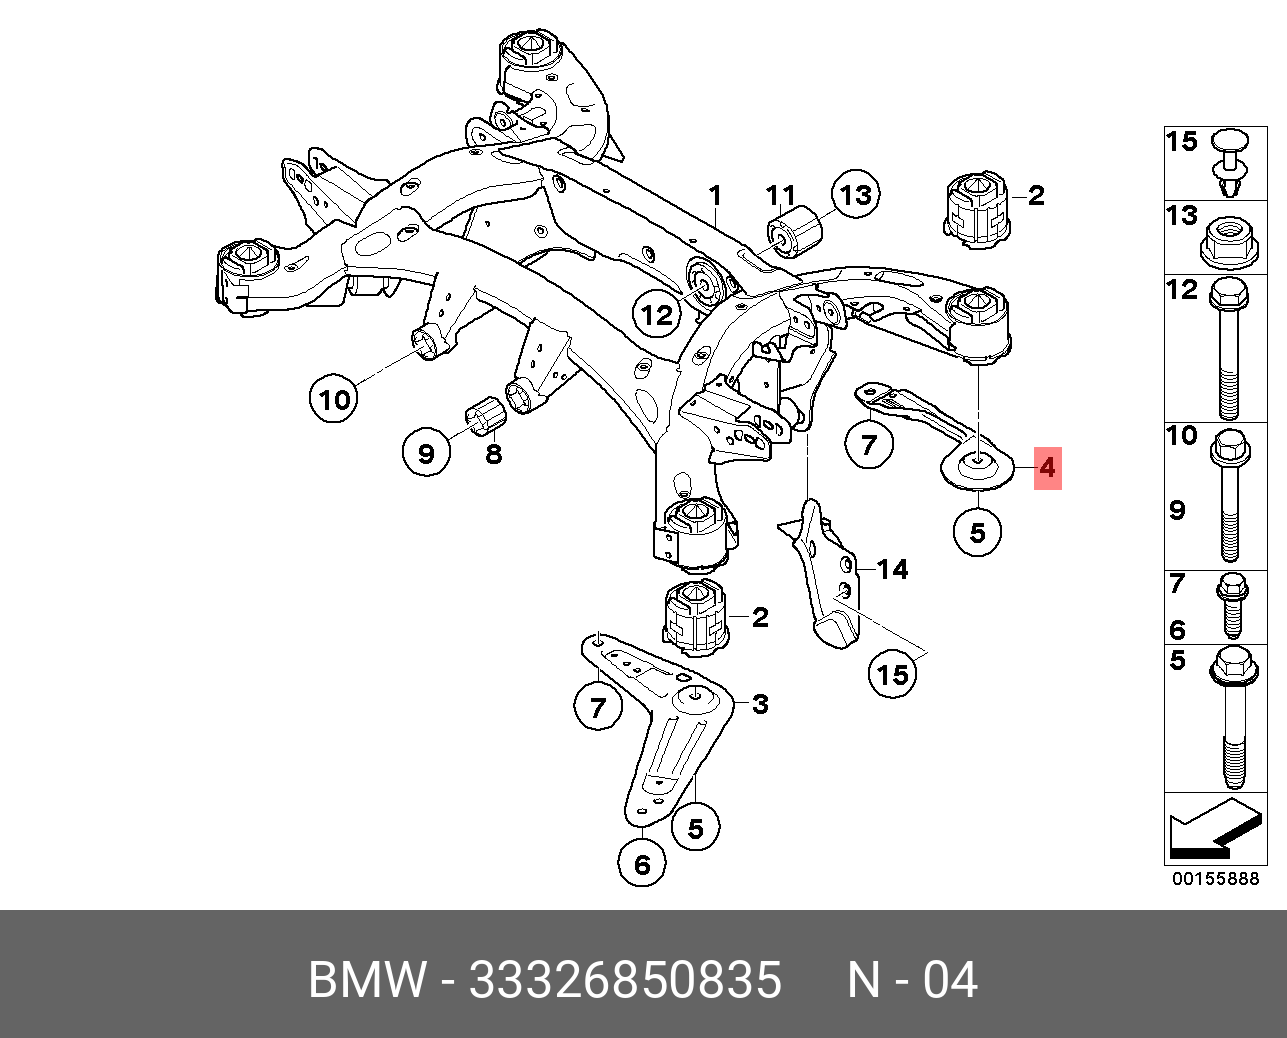 Подвеска х5 е70. Задняя подвеска БМВ х5 е70 схема. Задняя подвеска BMW x5 e53 схема. Задняя подвеска BMW x5 e70. Сайлентблок заднего подрамника BMW x5 e53.